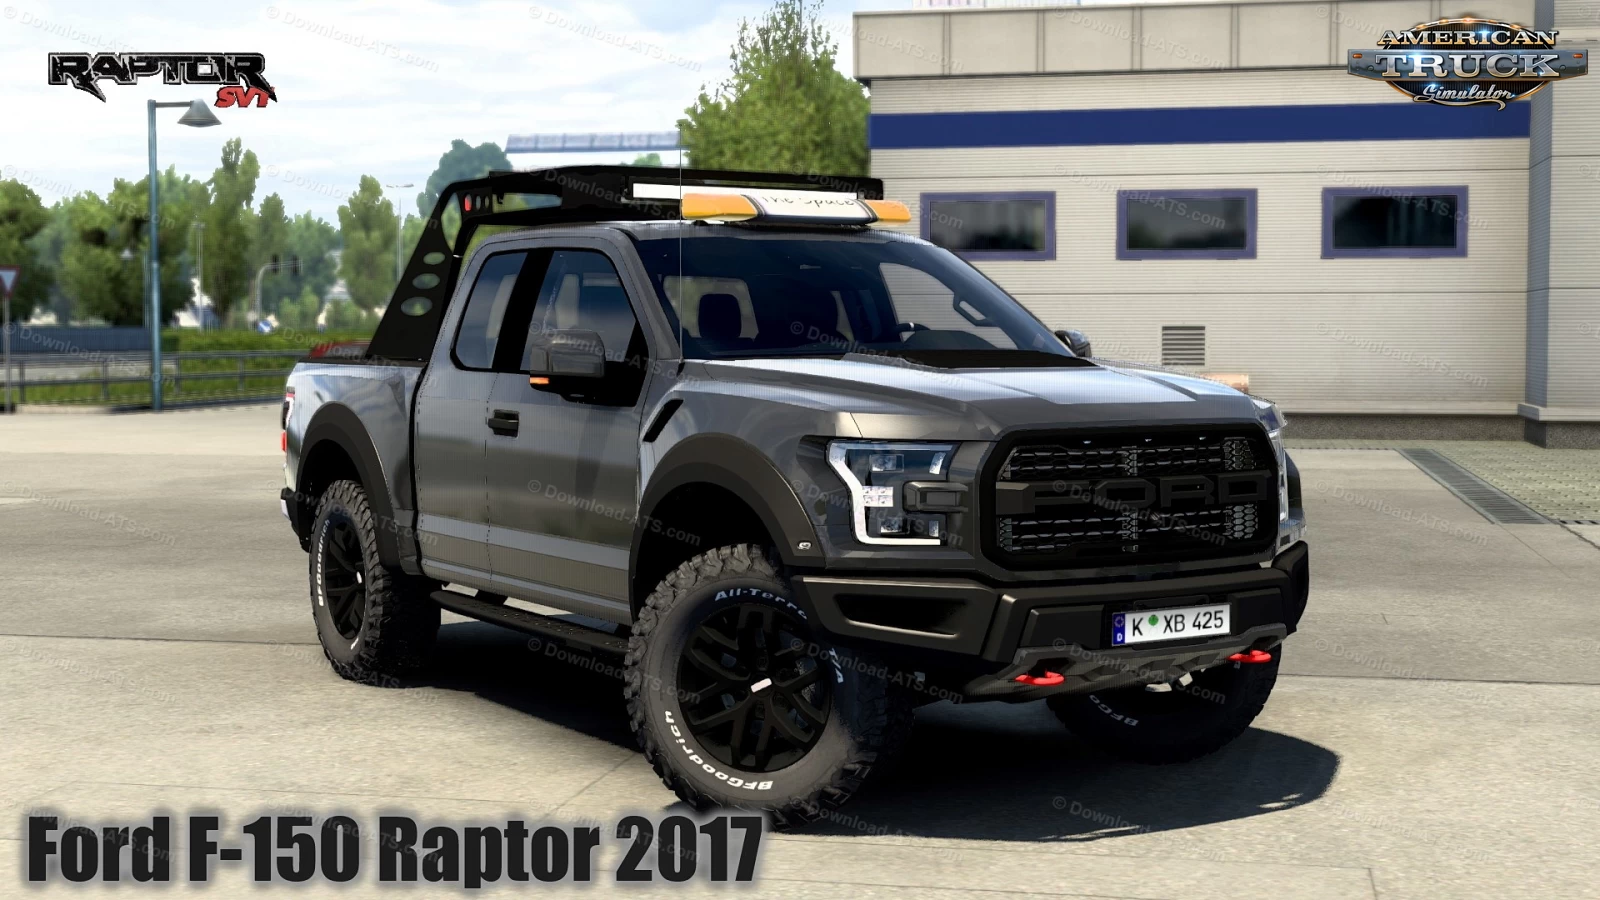 Ford F-150 Raptor 2017 + Interior v1.7.2 (1.45.x) for ATS